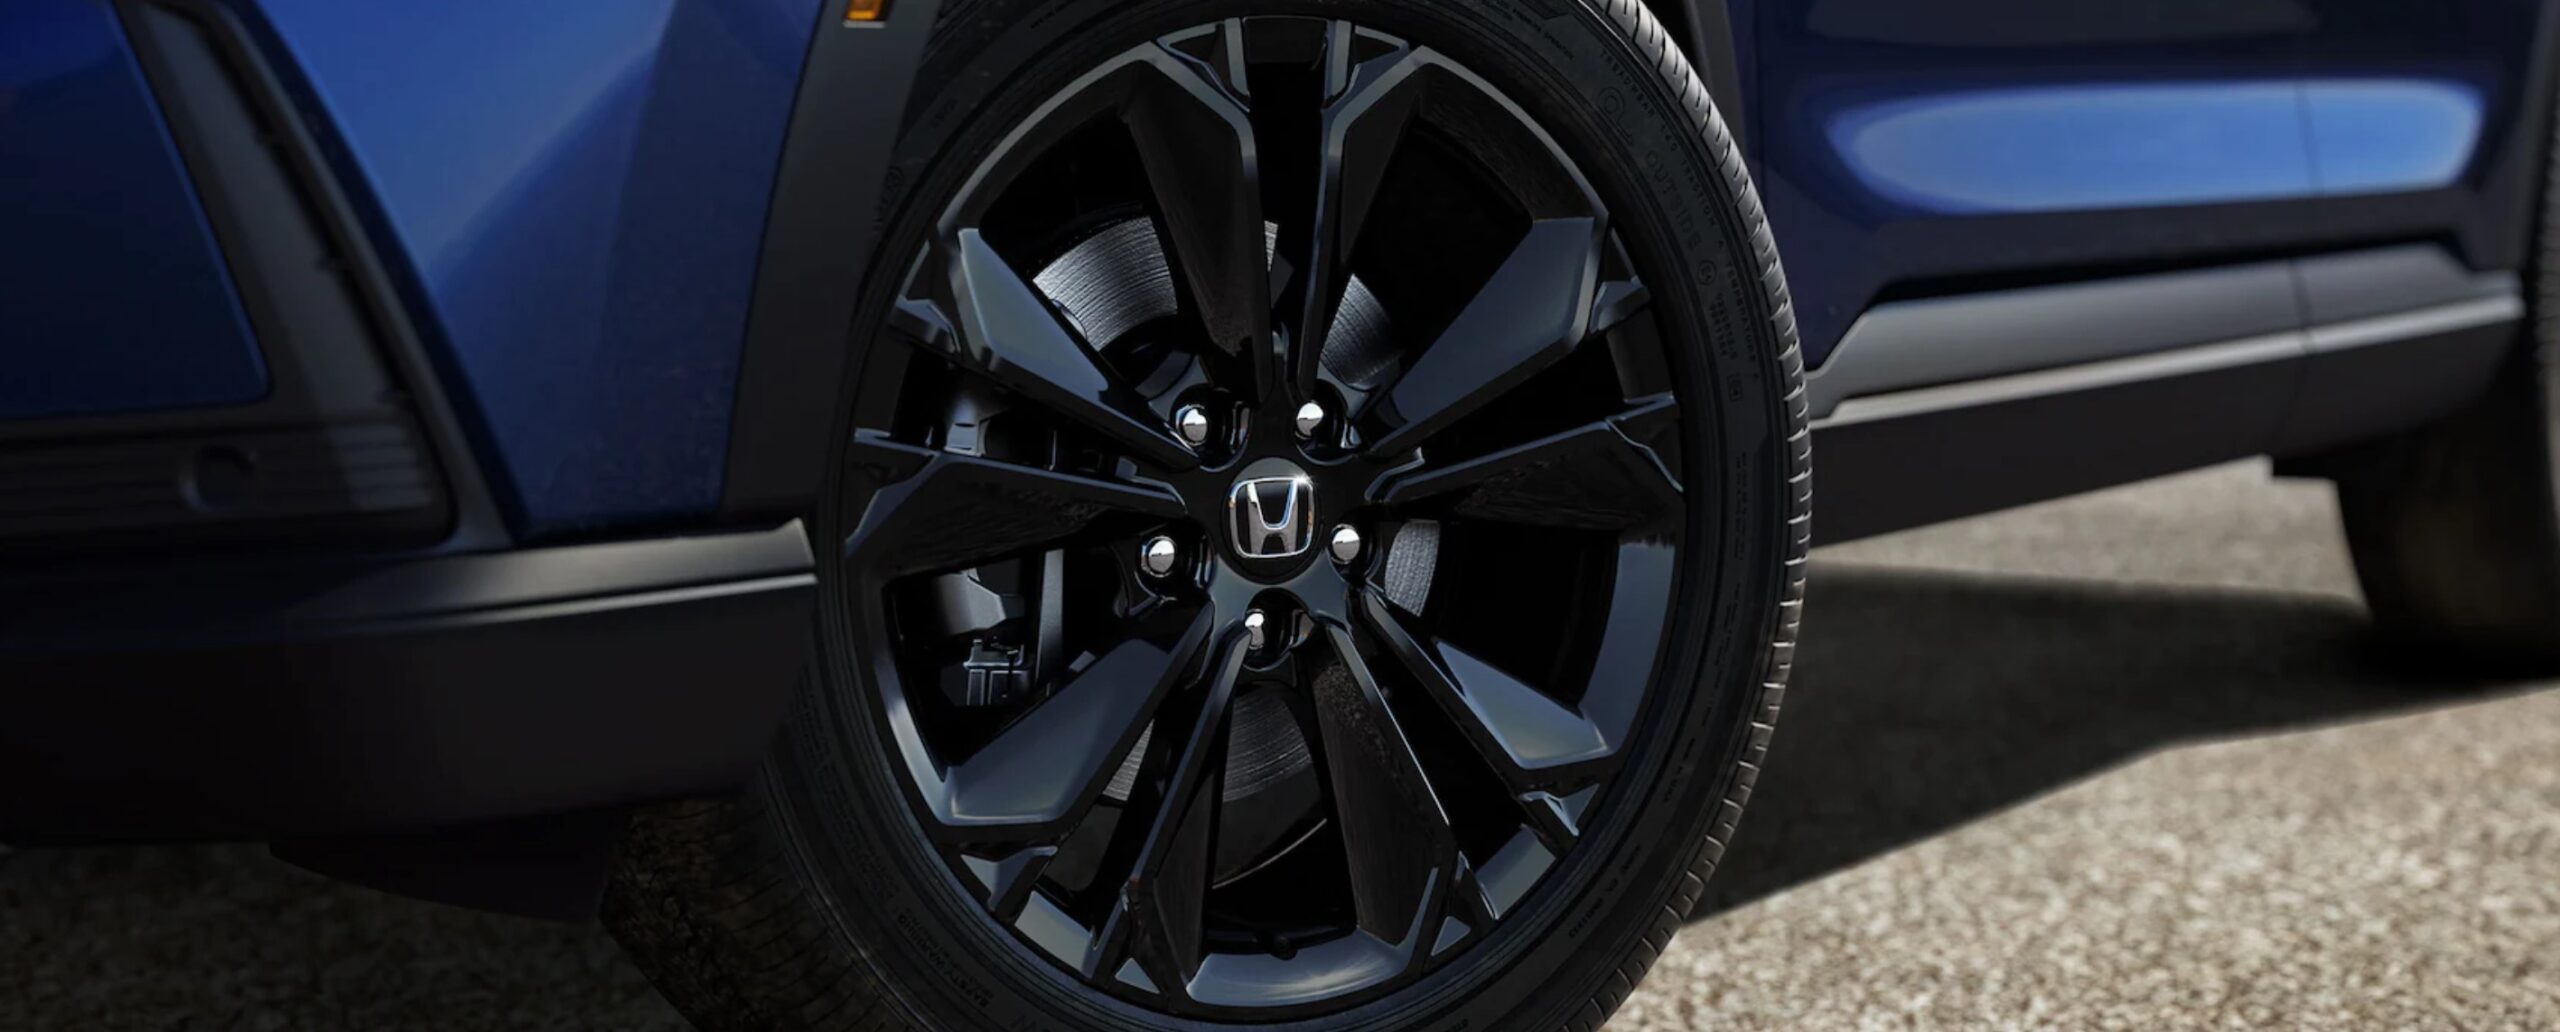 2023 Honda CR-V in Canyon River Blue Metallic Wheels